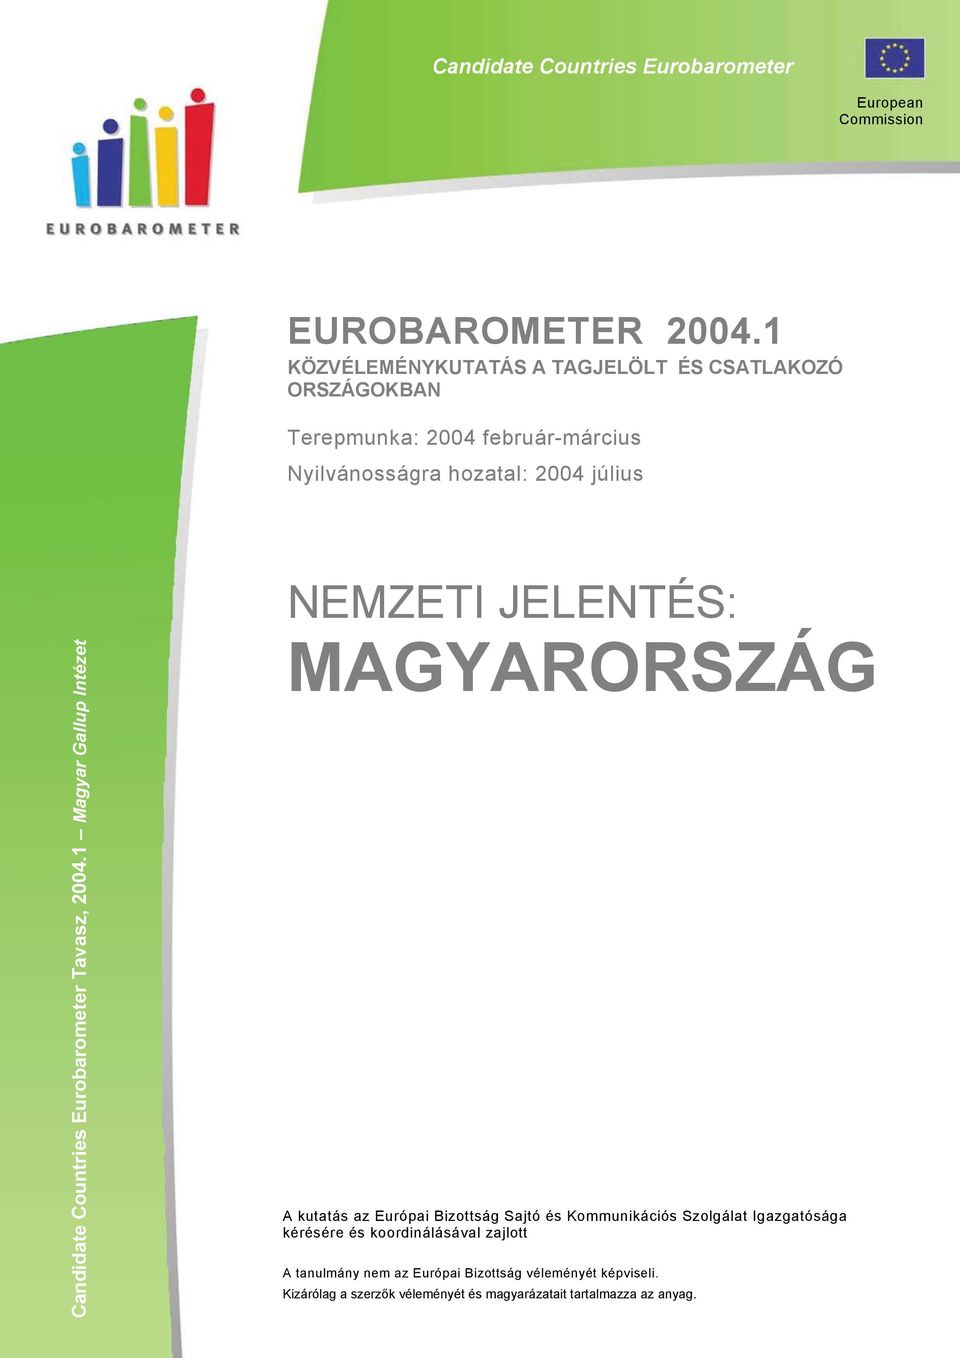 Candidate Countries Eurobarometer Tavasz, 2004.